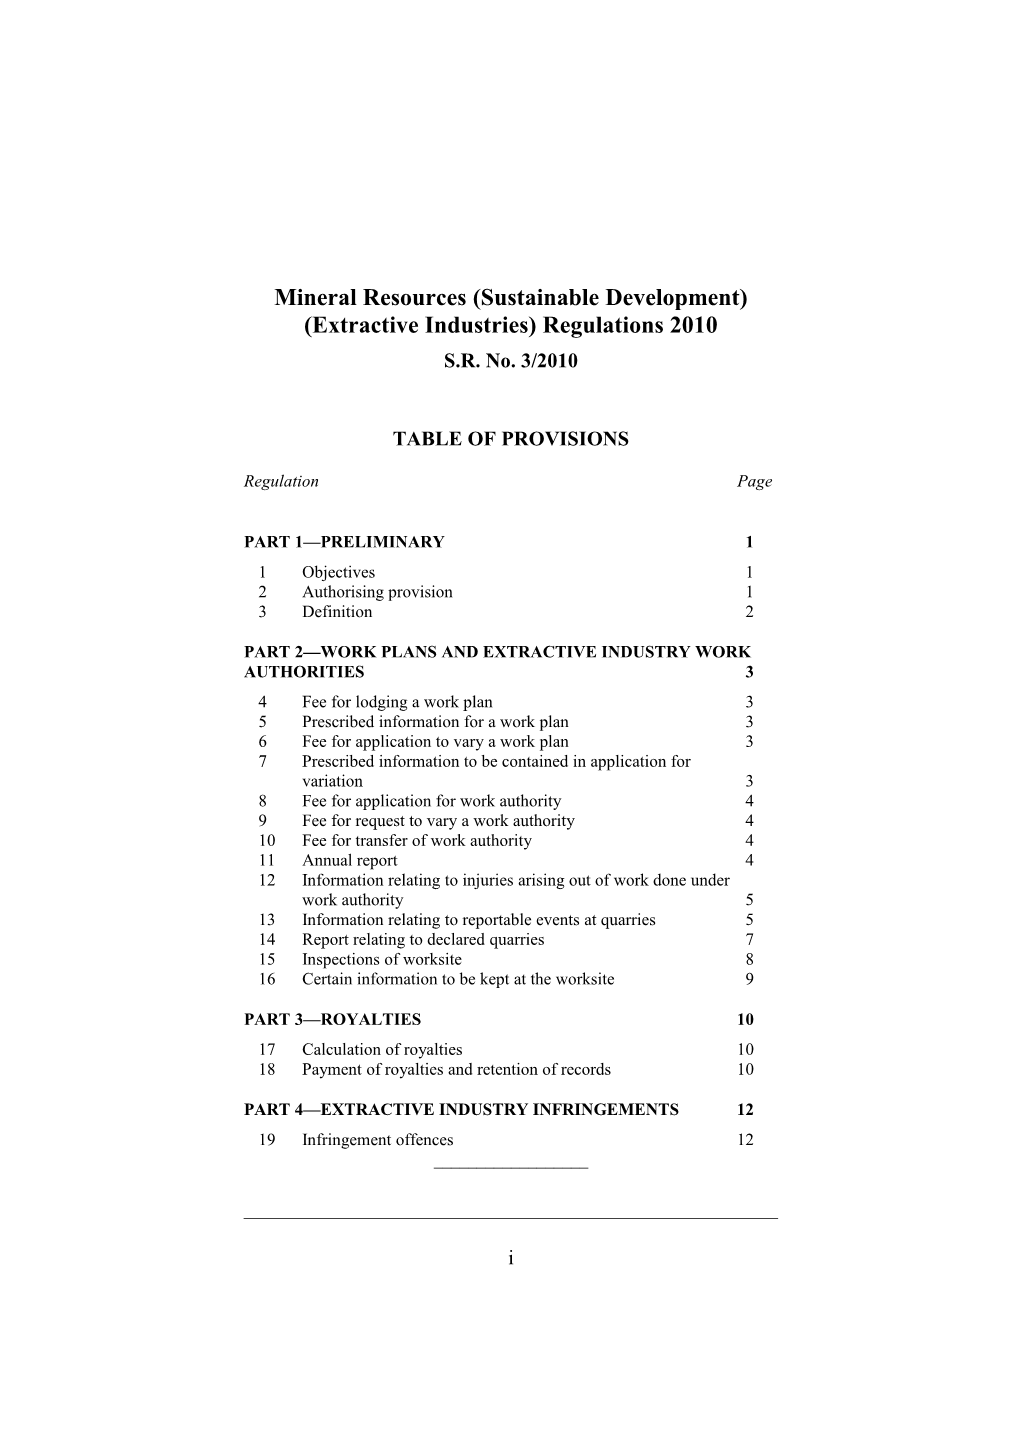 Mineral Resources (Sustainable Development) (Extractive Industries) Regulations 2010